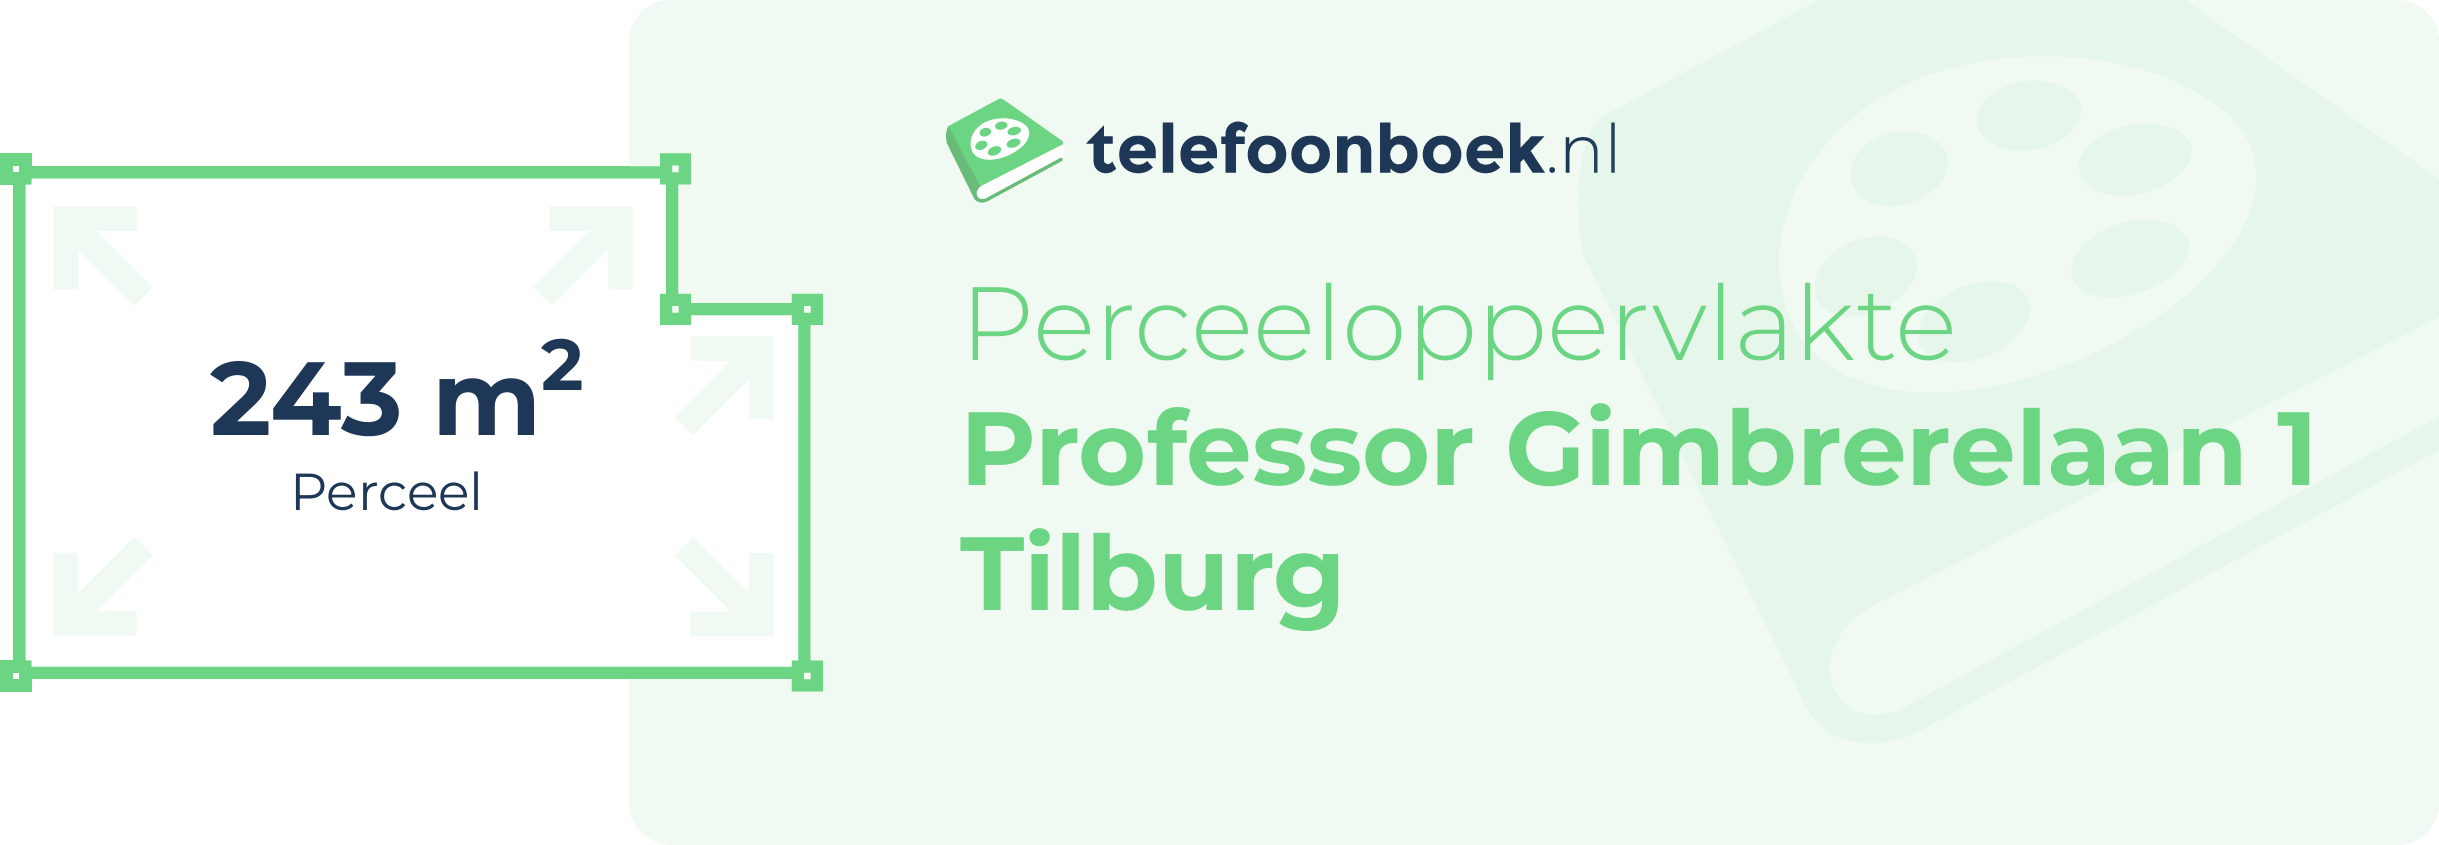 Perceeloppervlakte Professor Gimbrerelaan 1 Tilburg